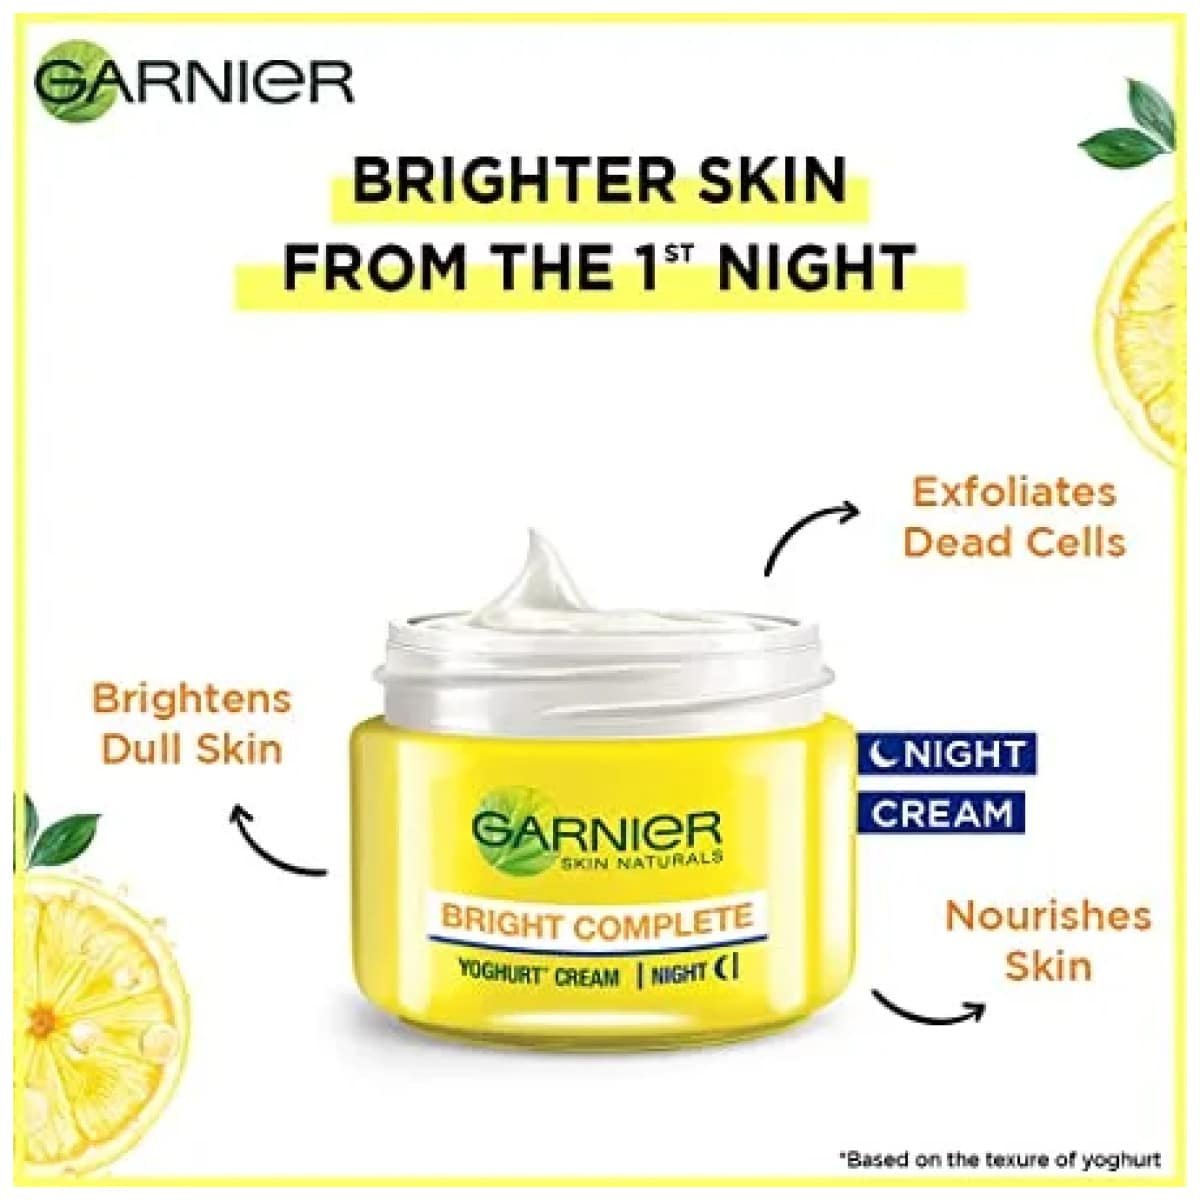 Garnier Bright Complete Vitamin C Yoghurt Night Cream 40g